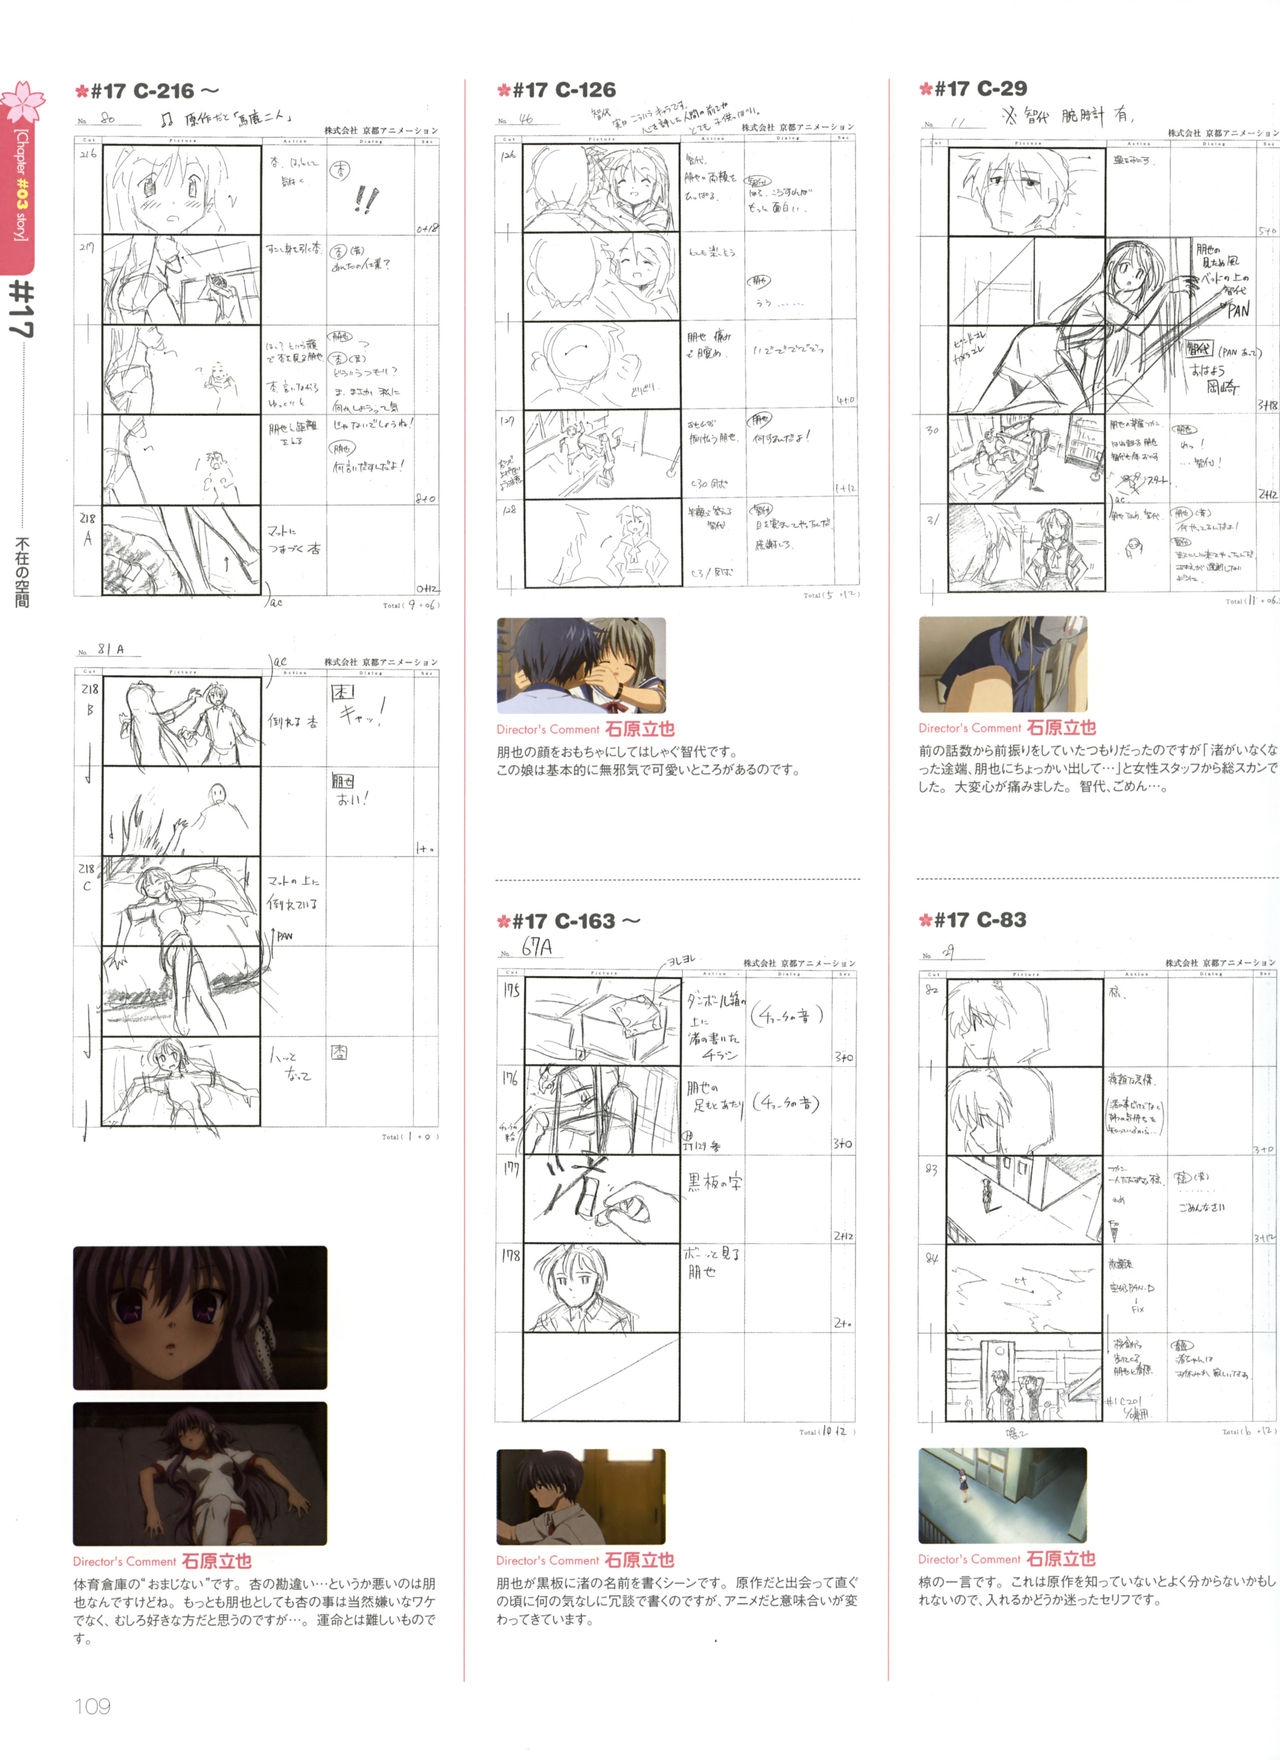 Clannad TV Animation Visual Fan Book 112